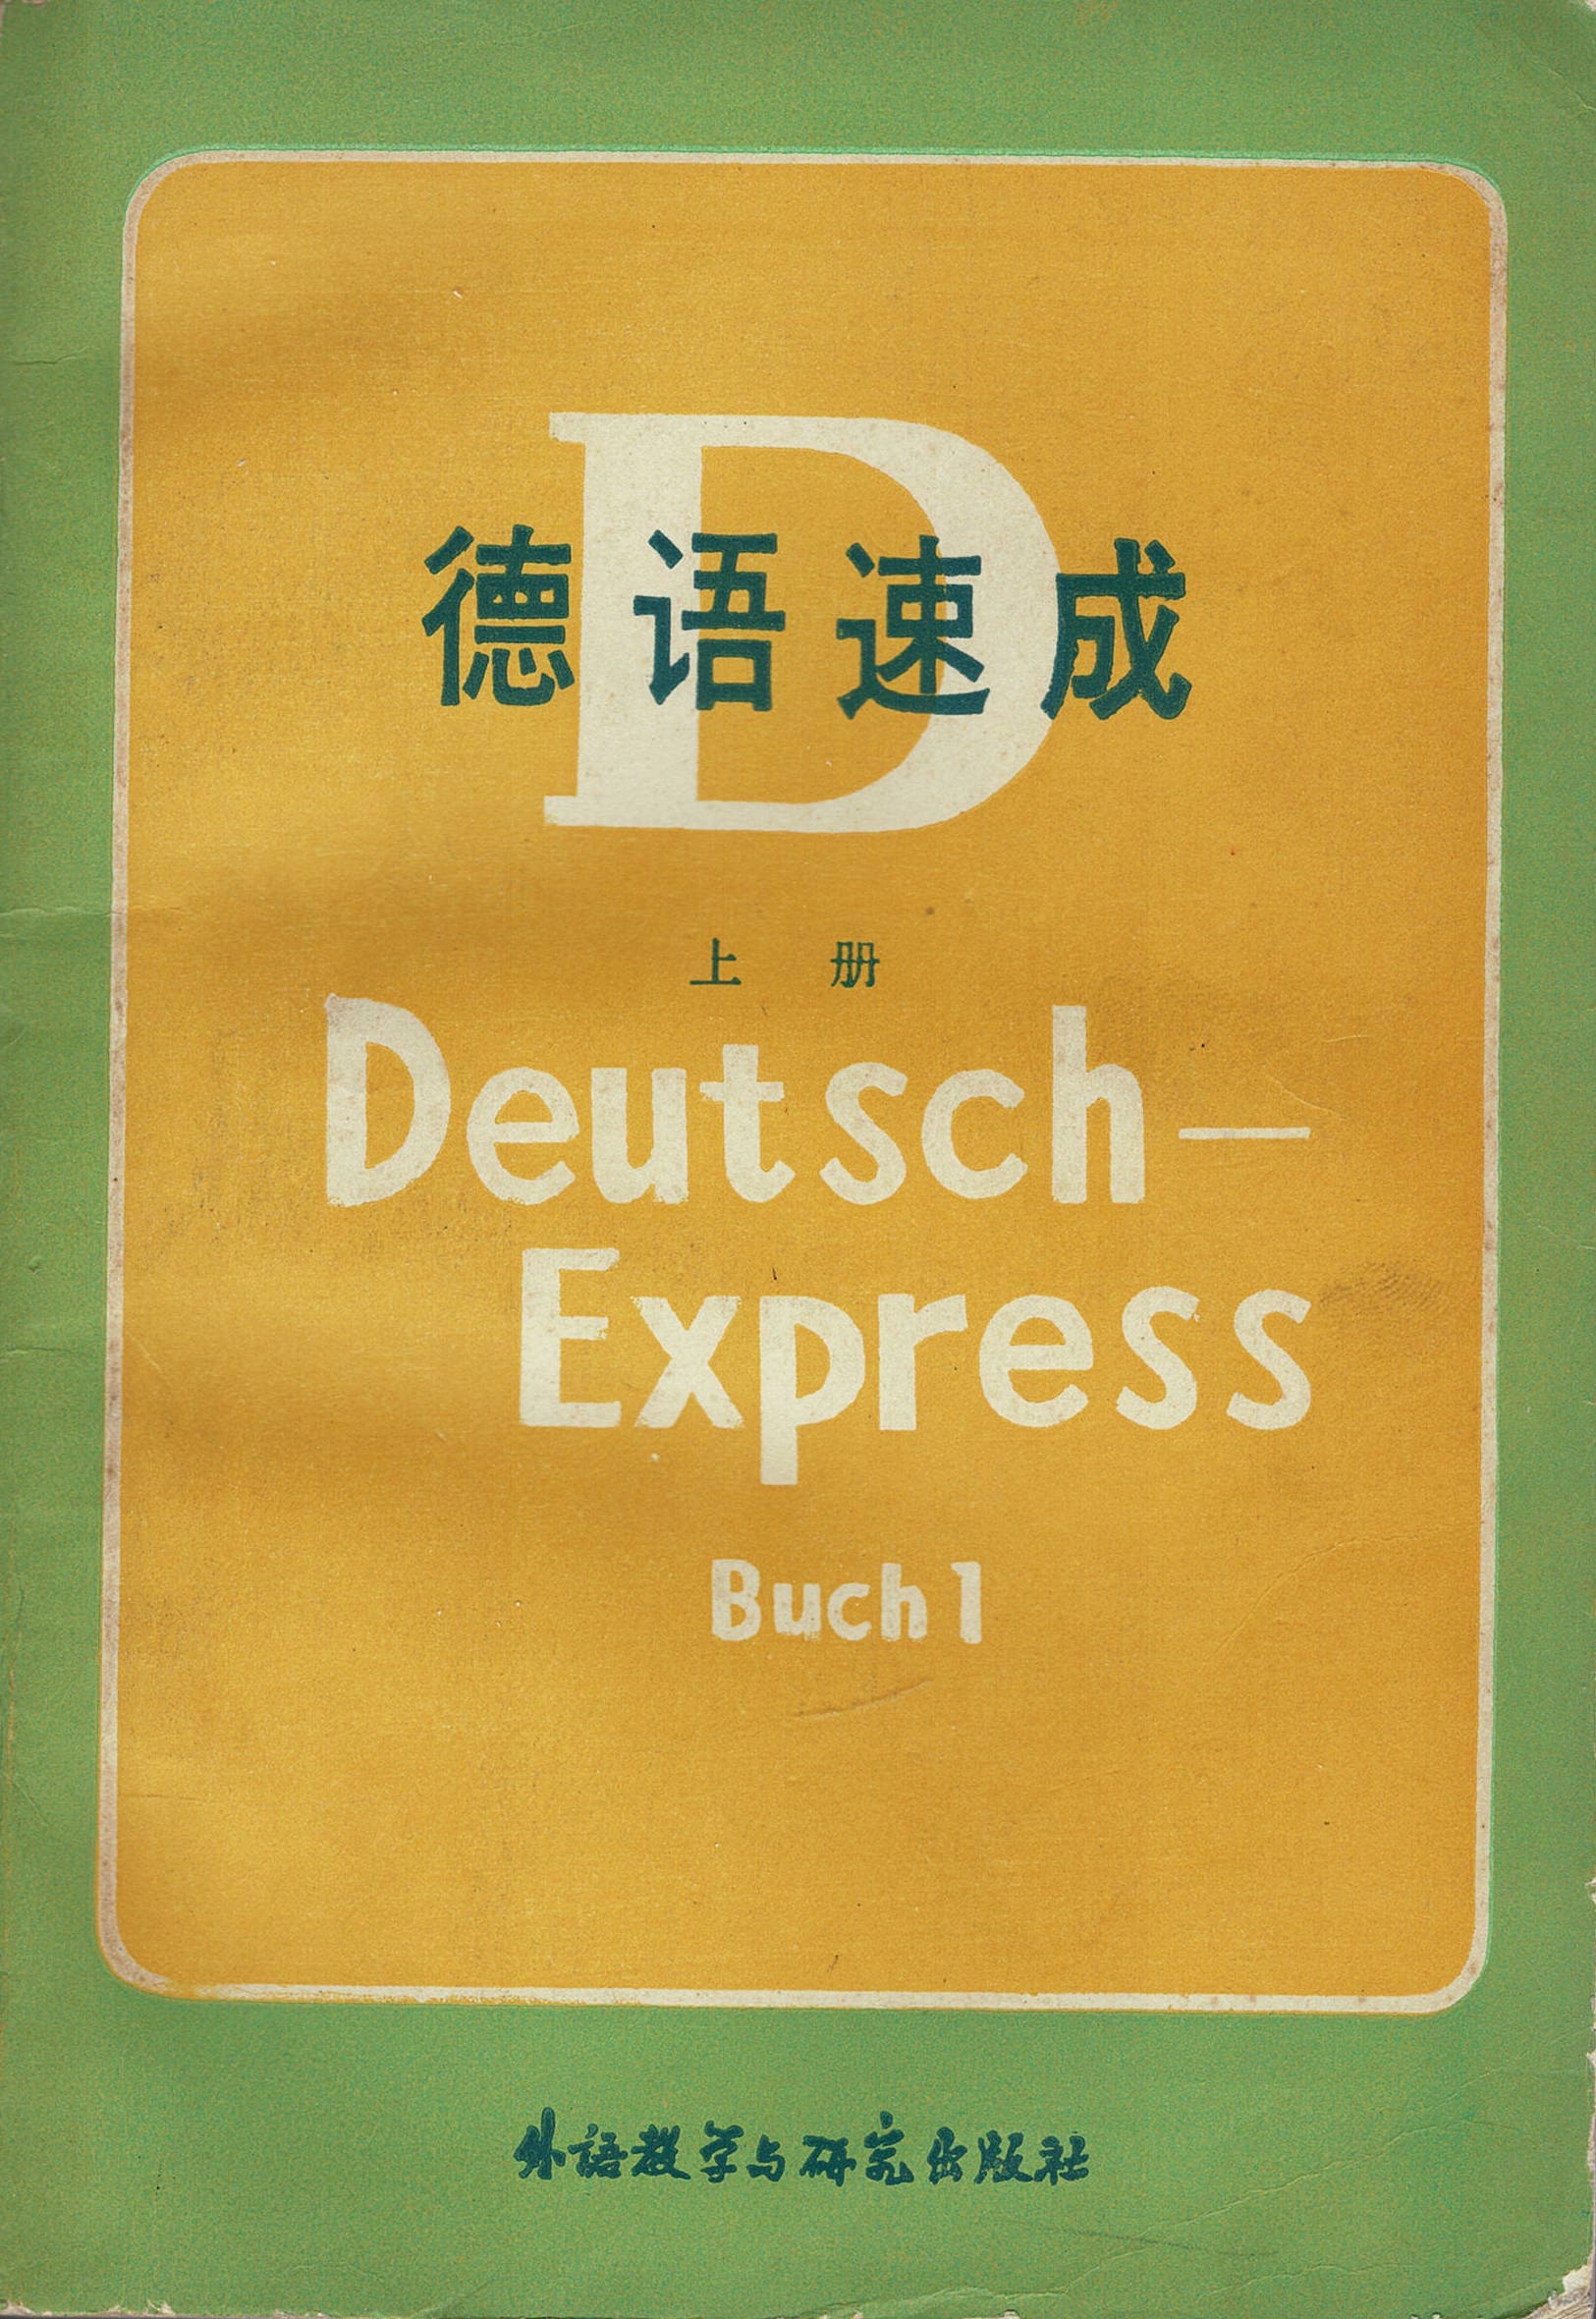 Deutsch Express Buch 1 德语速成: momobooks – momo books